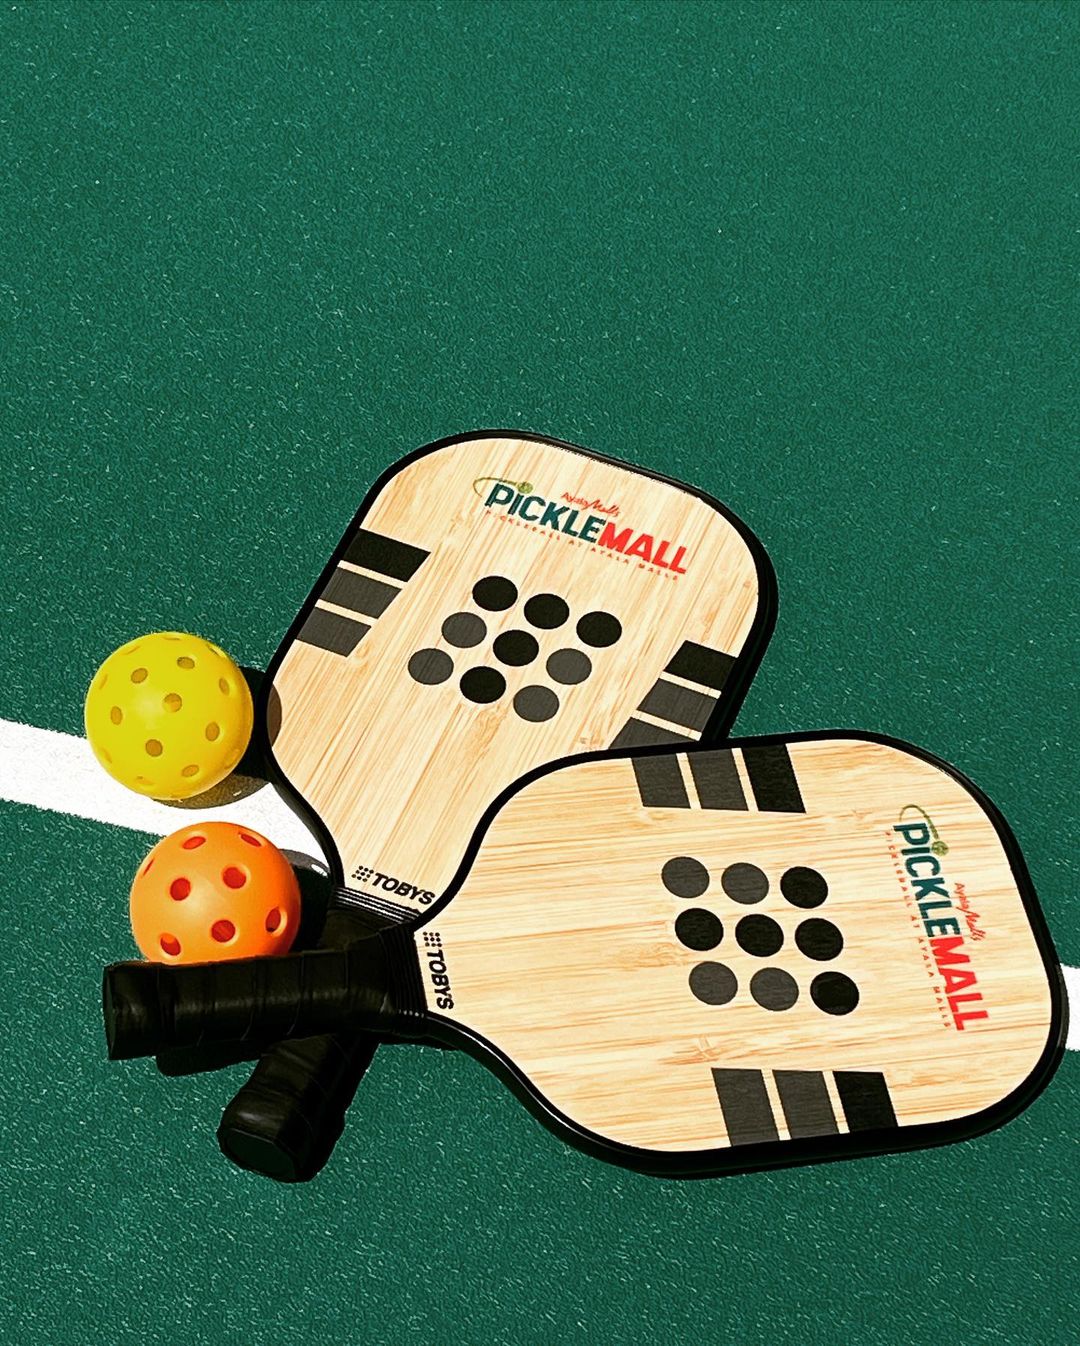 Pickleball racket and balls